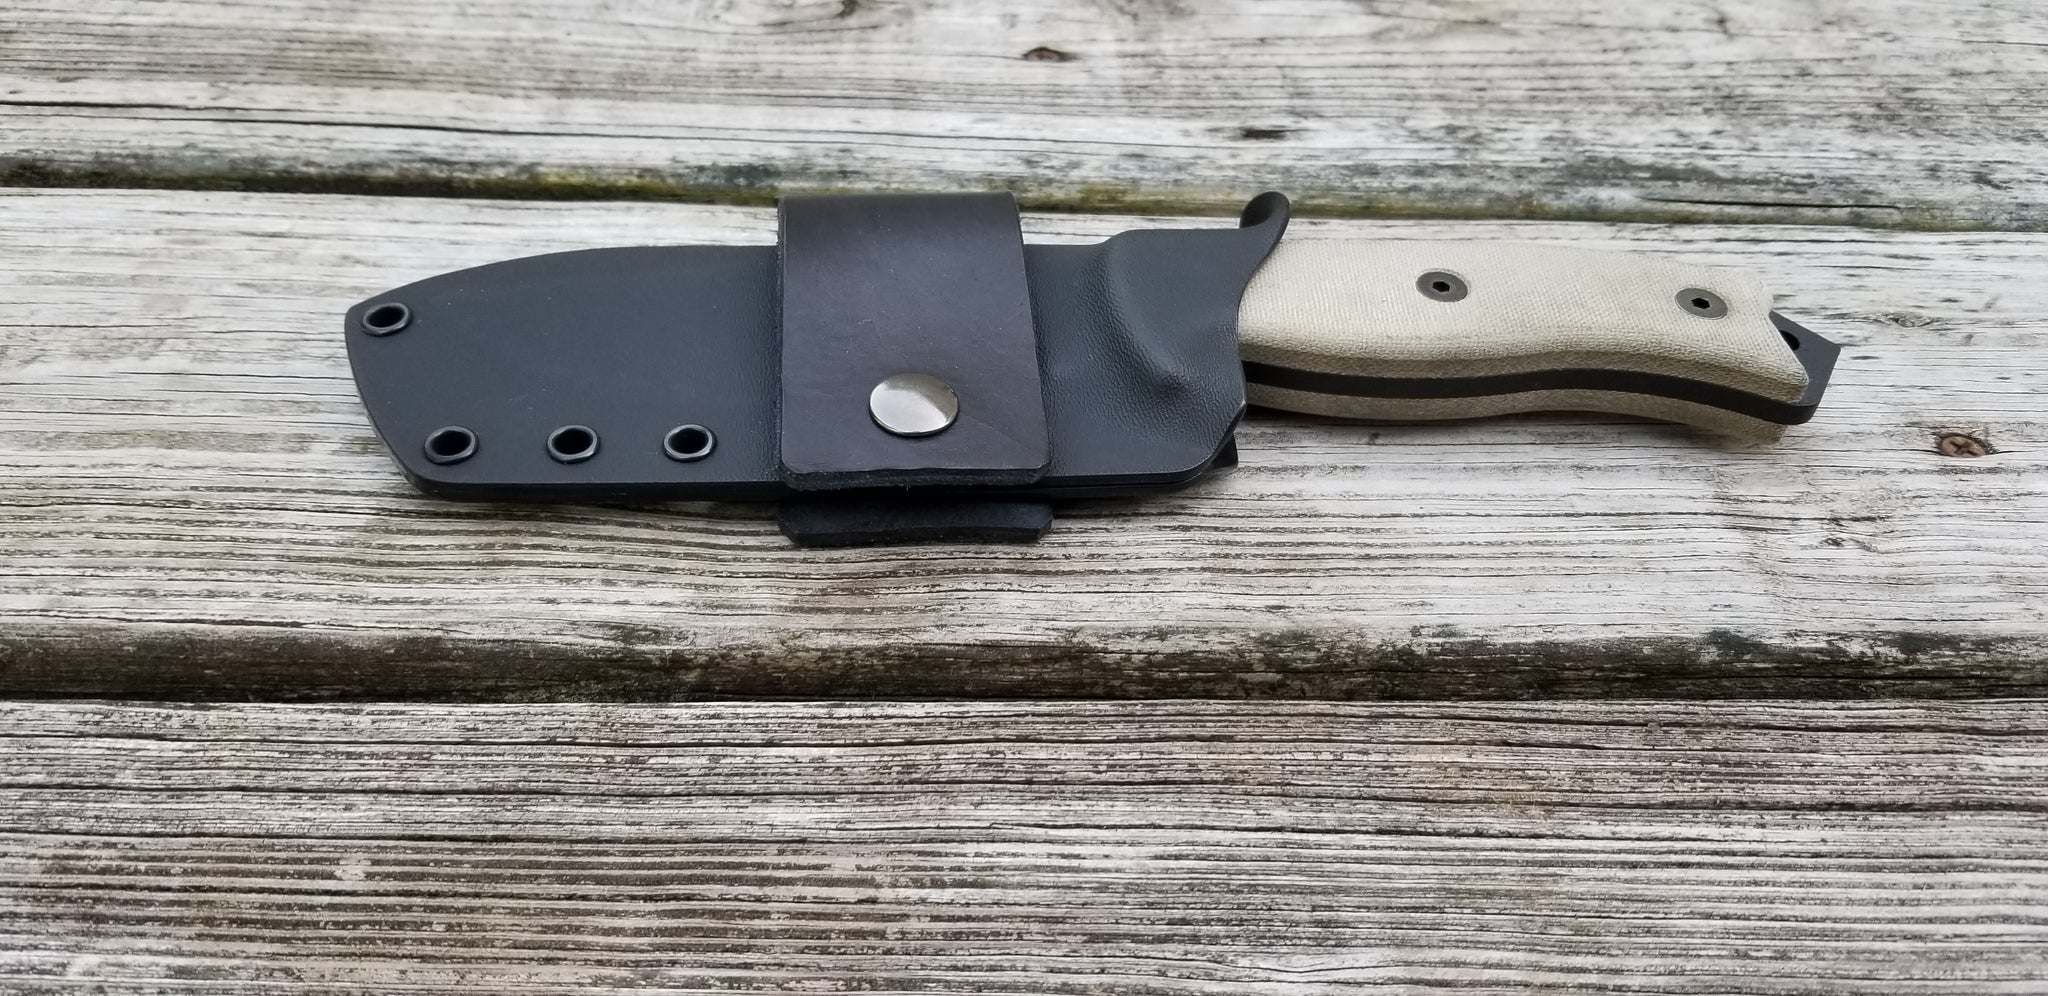 Ontario RAT-5 custom kydex sheath, single leather scout carry loop